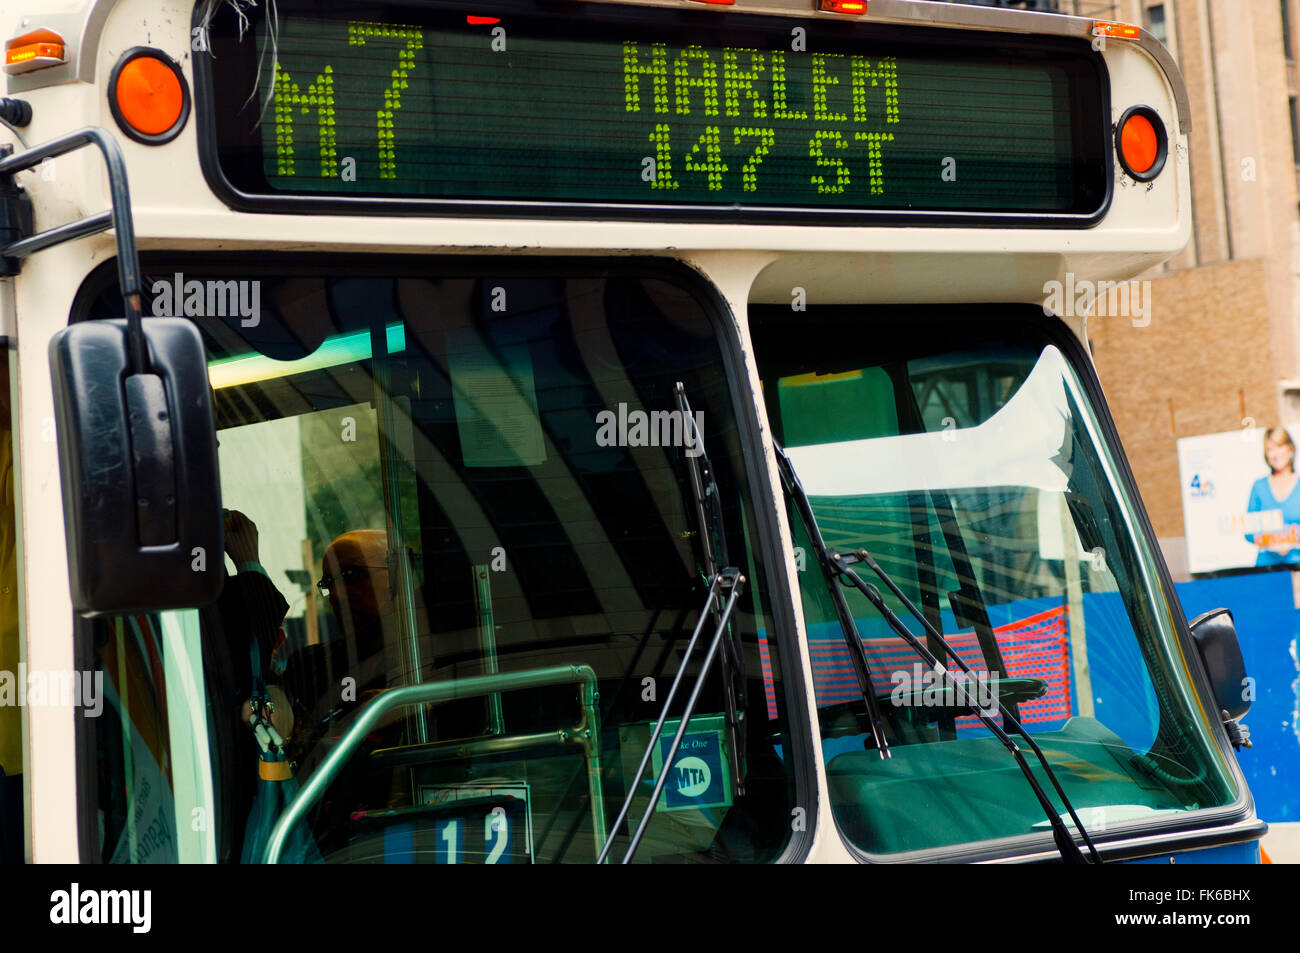 Image result for new york harlem bus